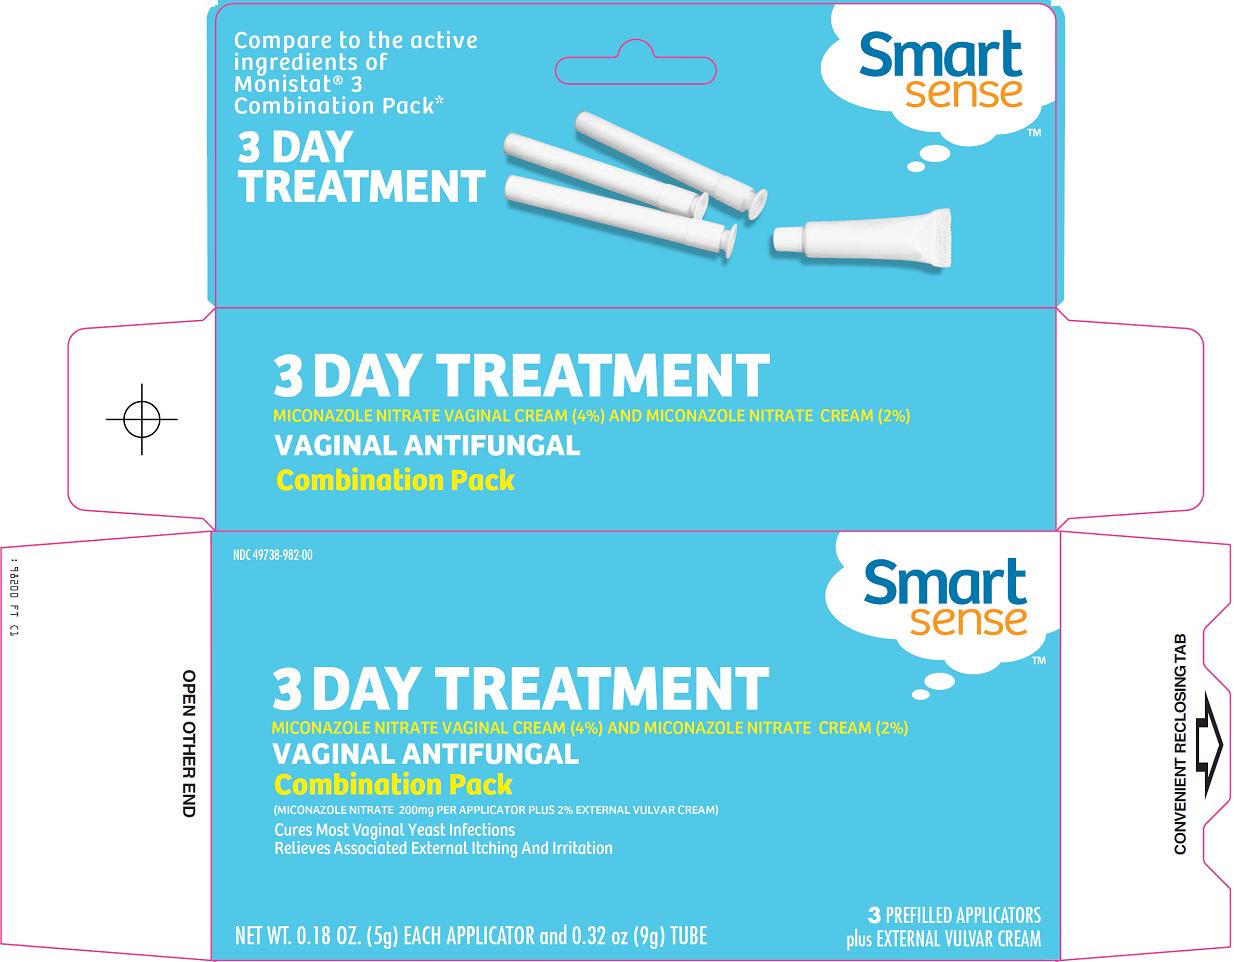 3 Day Treatment Carton Image 1